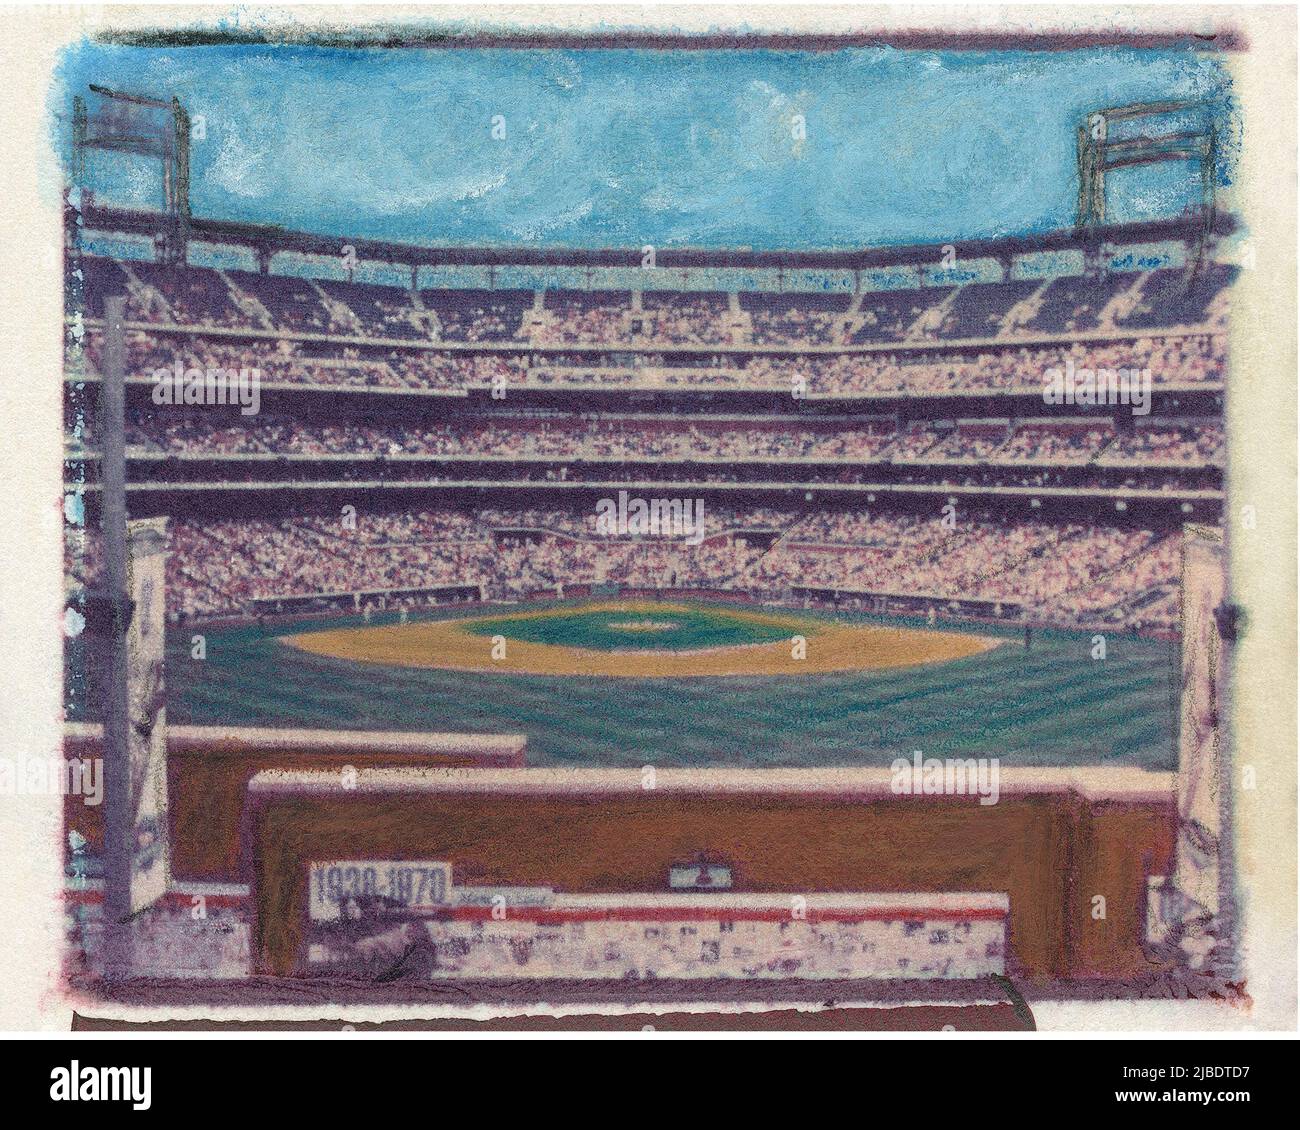 MLB Philadelphia Phillies Citizen Bank Park Stock Photo